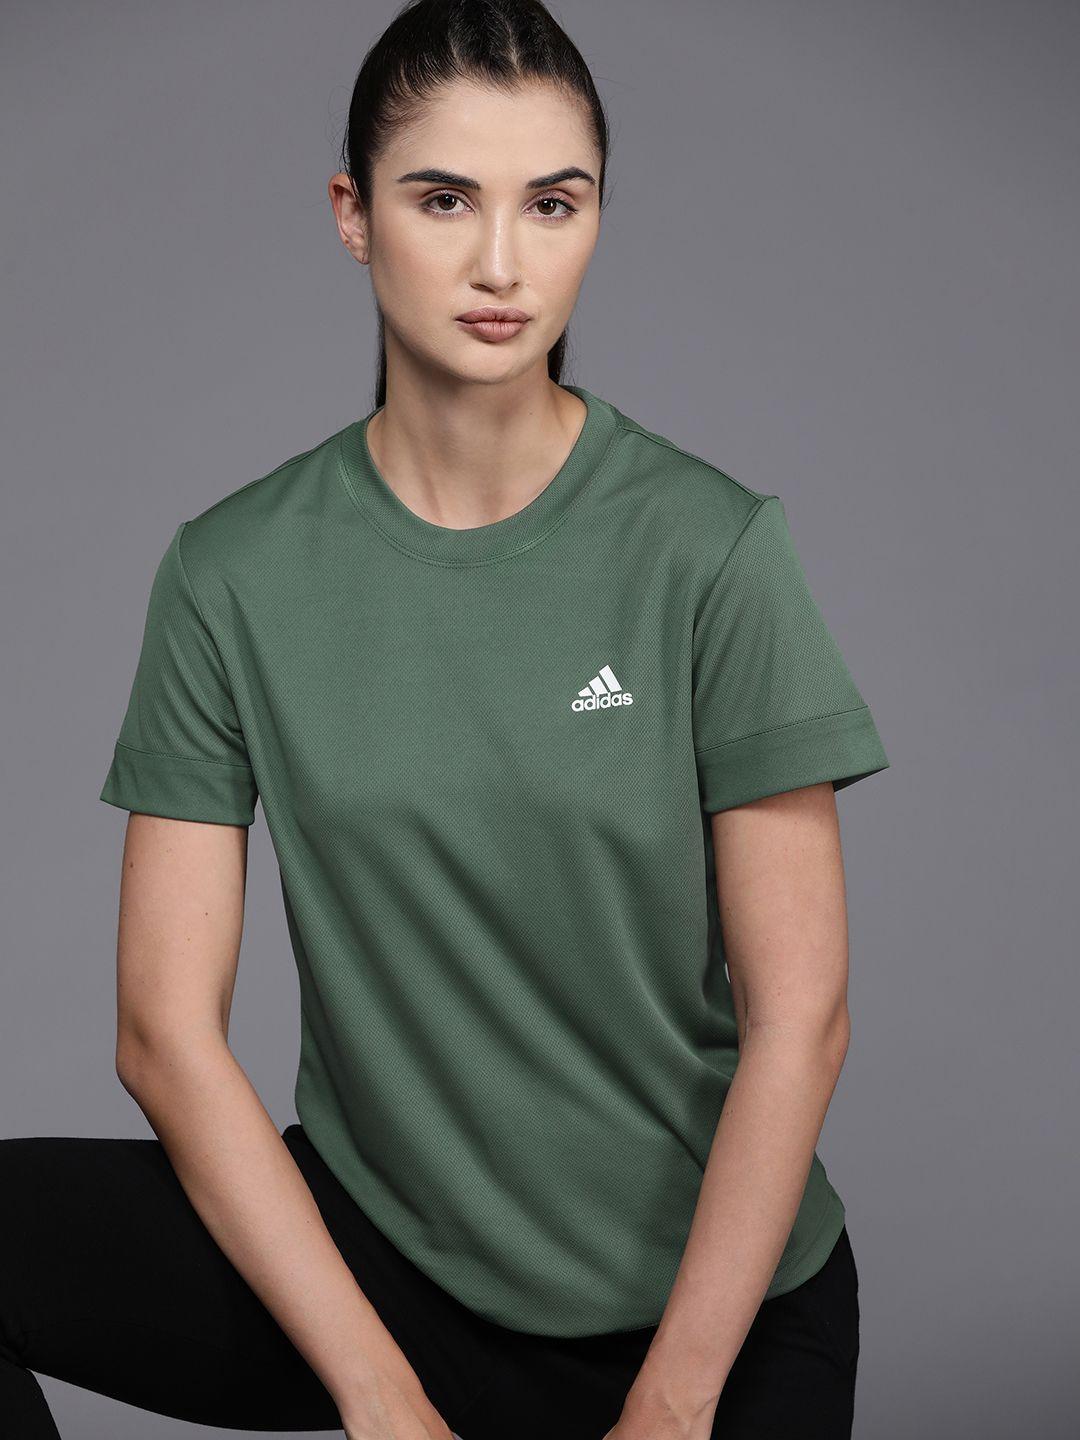 adidas women solid training t-shirt